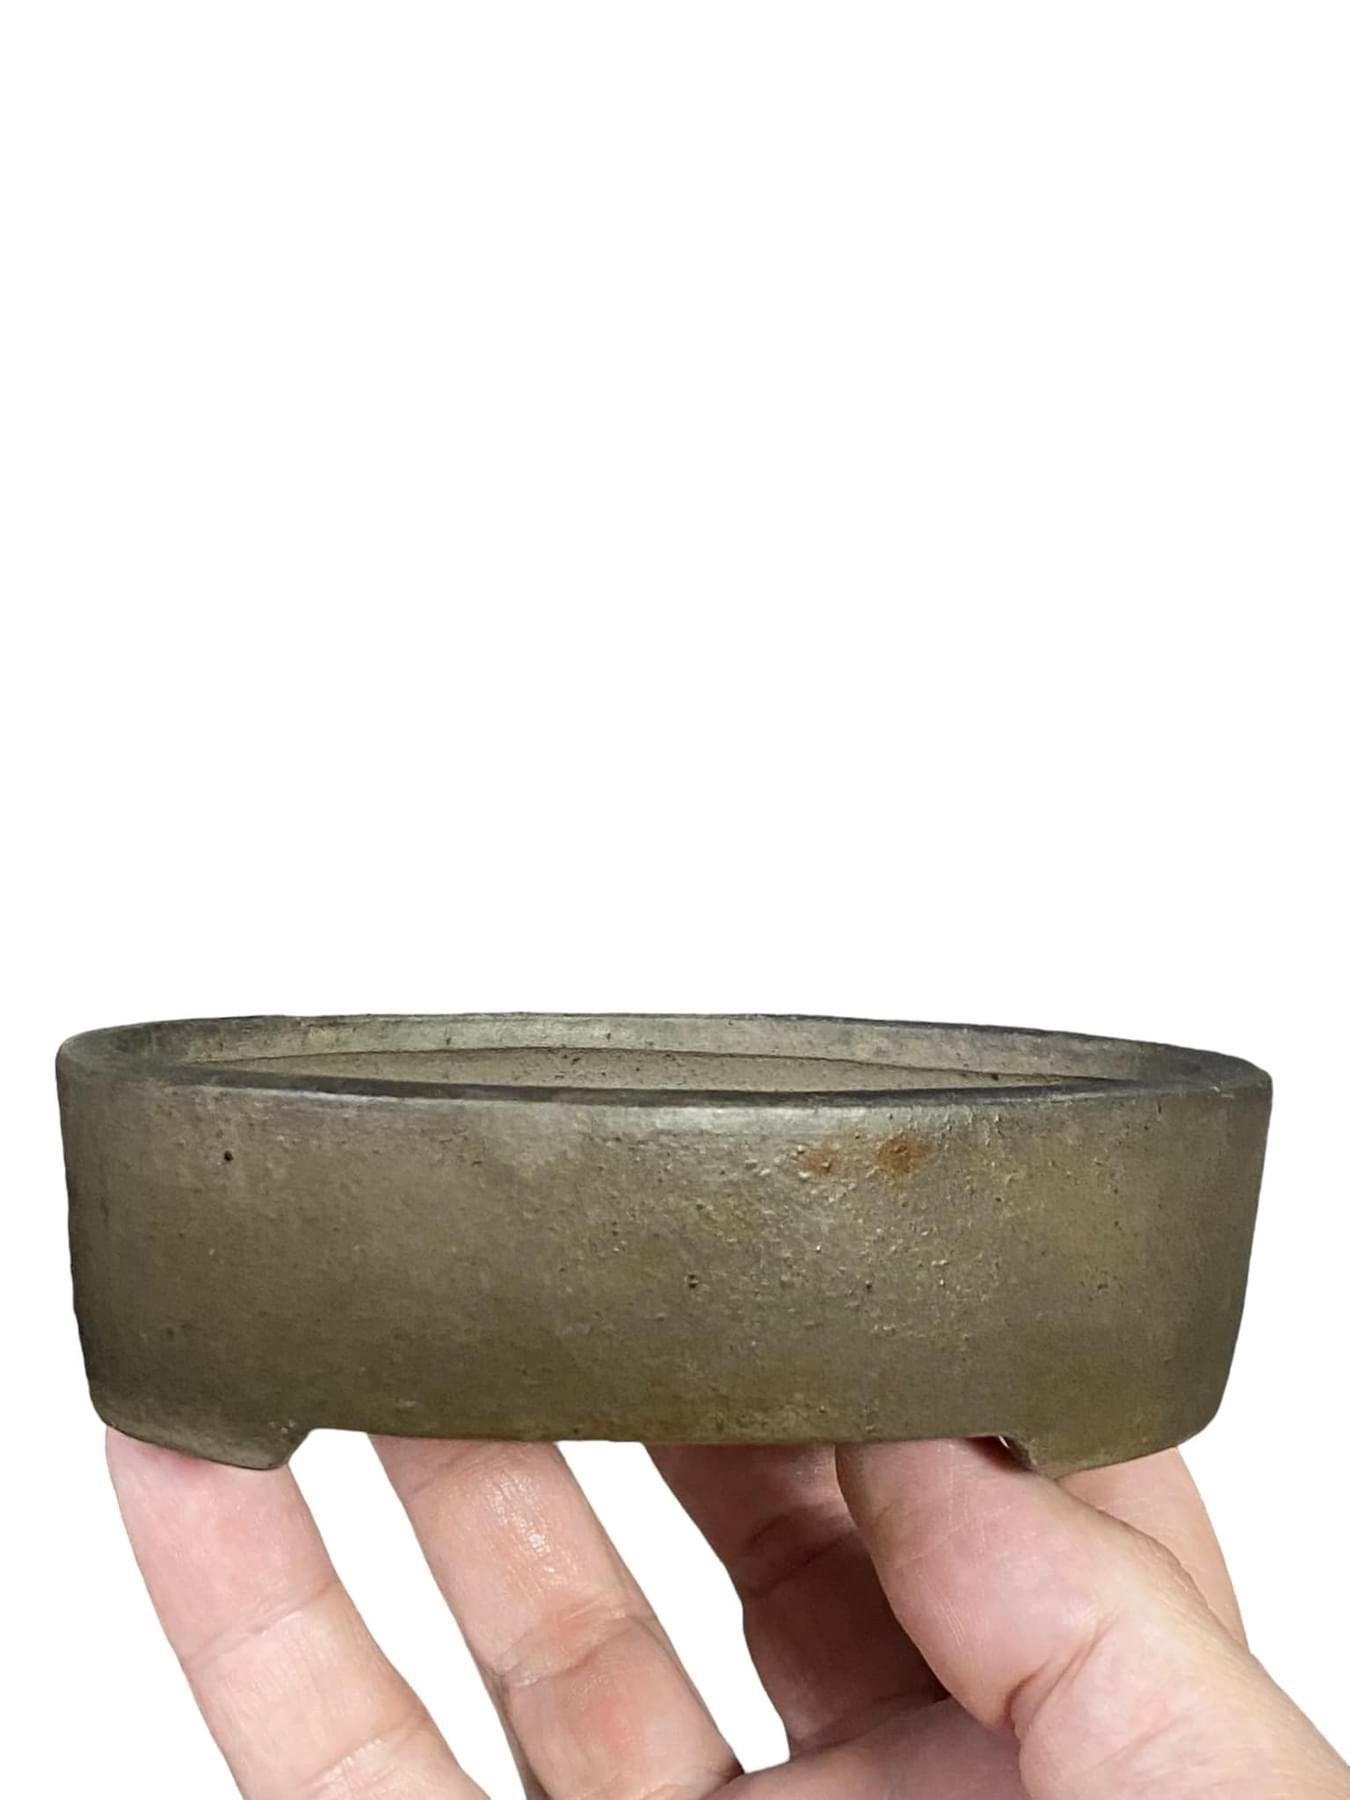 Syouzan Production - Stellar Value Oval Bonsai Pot with Patina (4-3/4” wide)